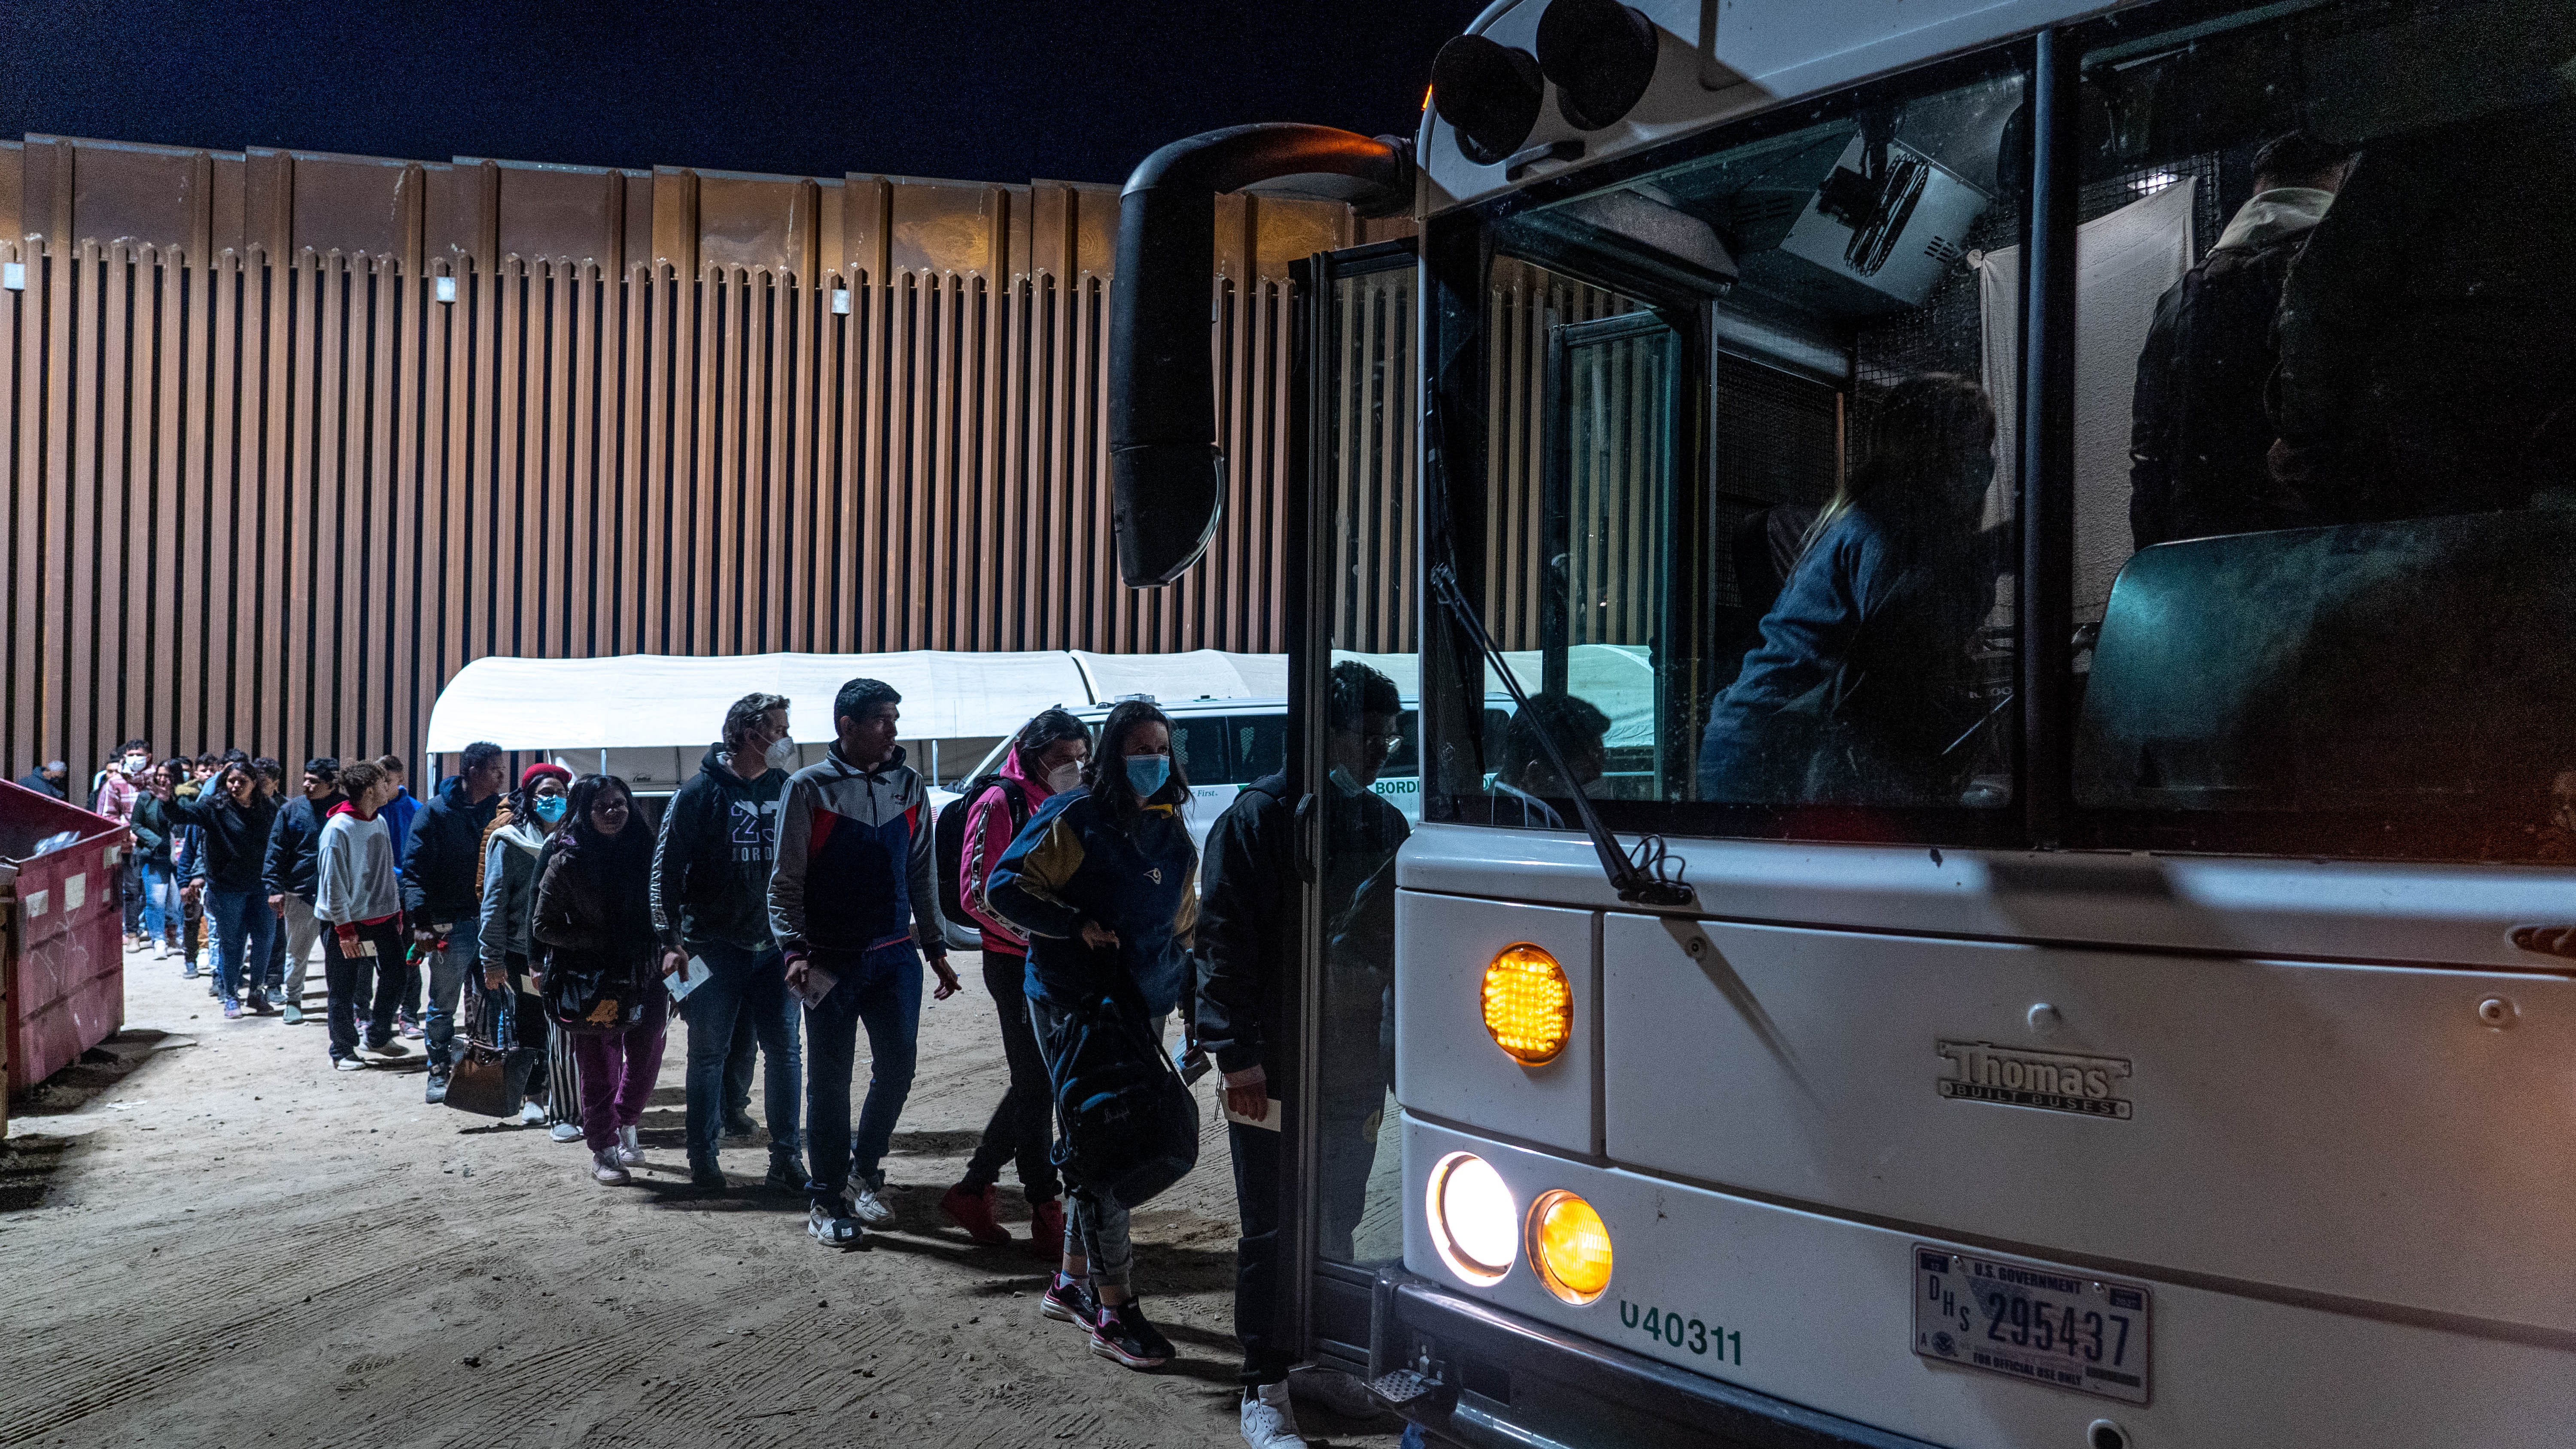 Bus Blackmail Sex Video - How cartels profit from migrants' desperation along U.S.-Mexico border